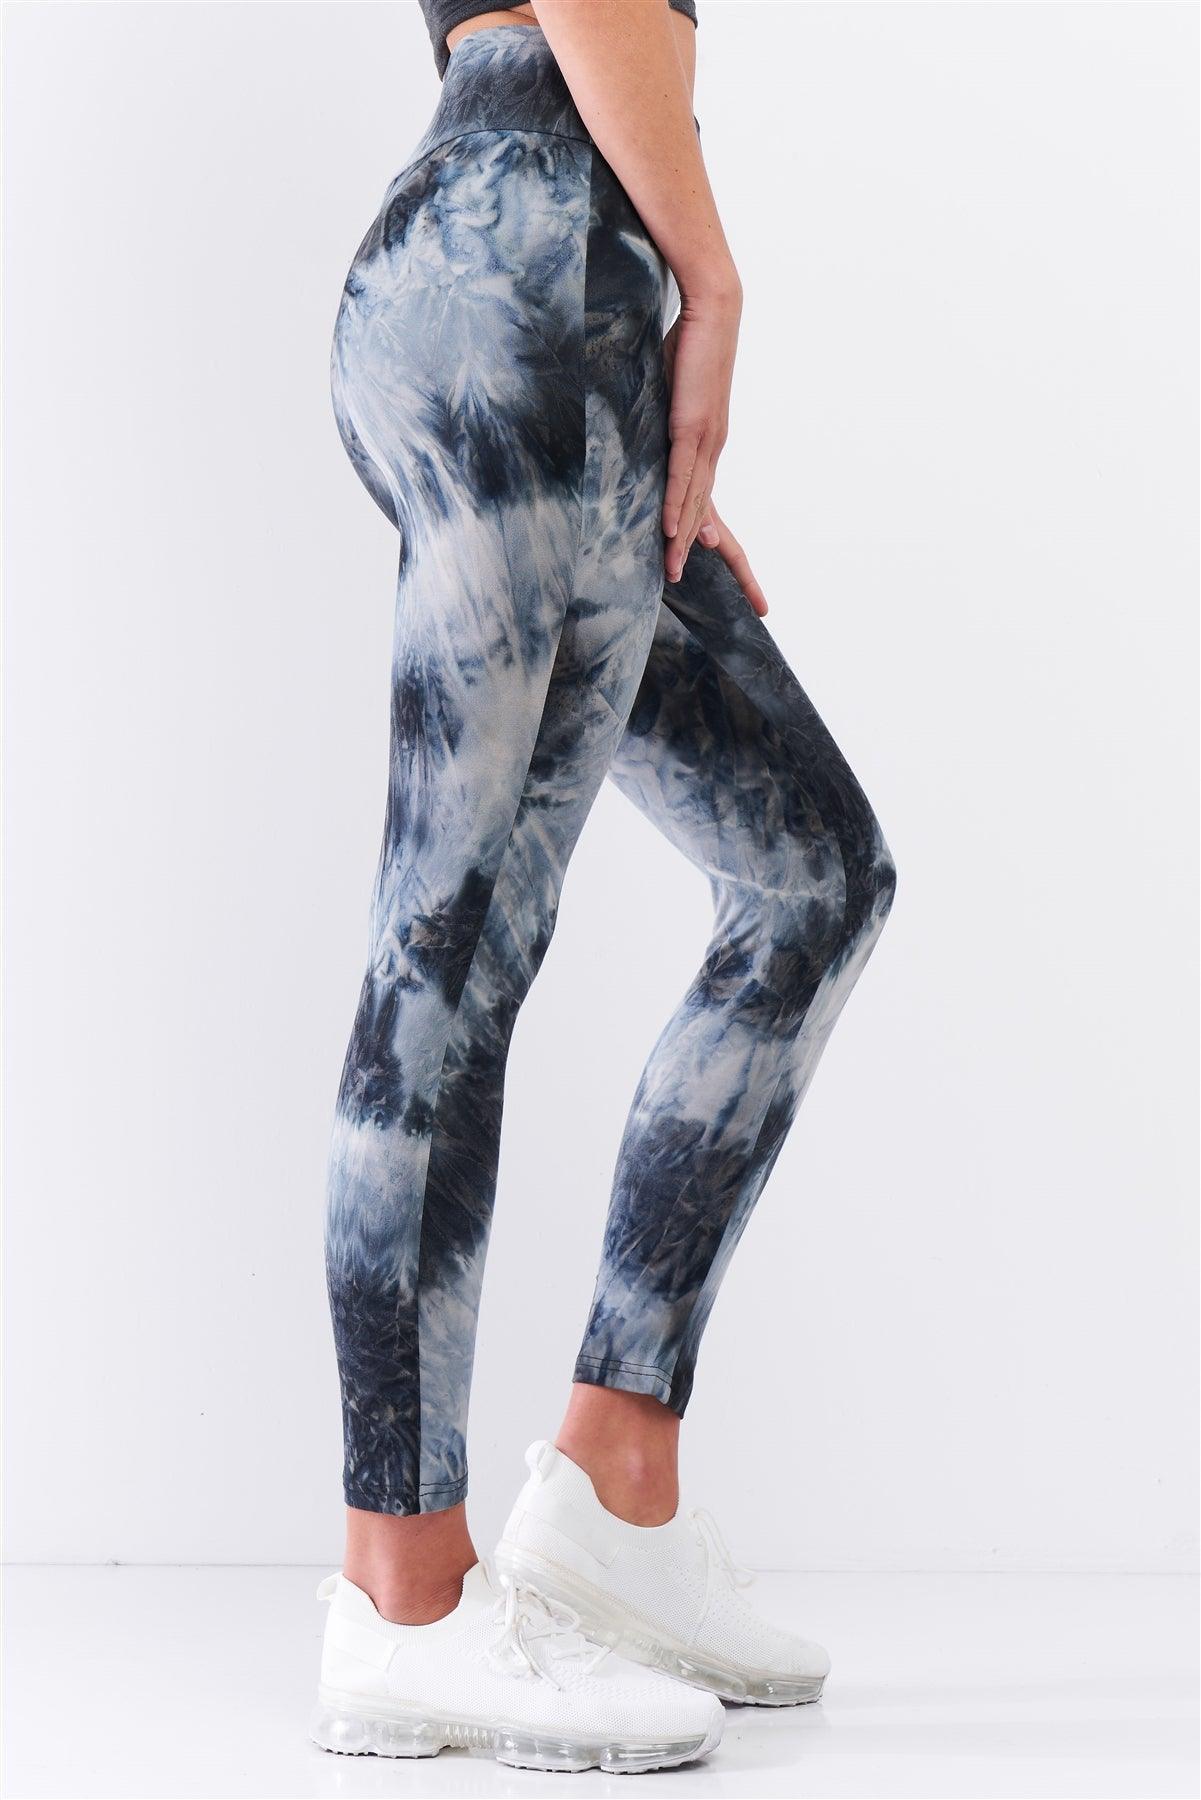 Comfy Dark Teal Tie-Dye High Waisted Stretchy Yoga Legging Pants /3-2-1